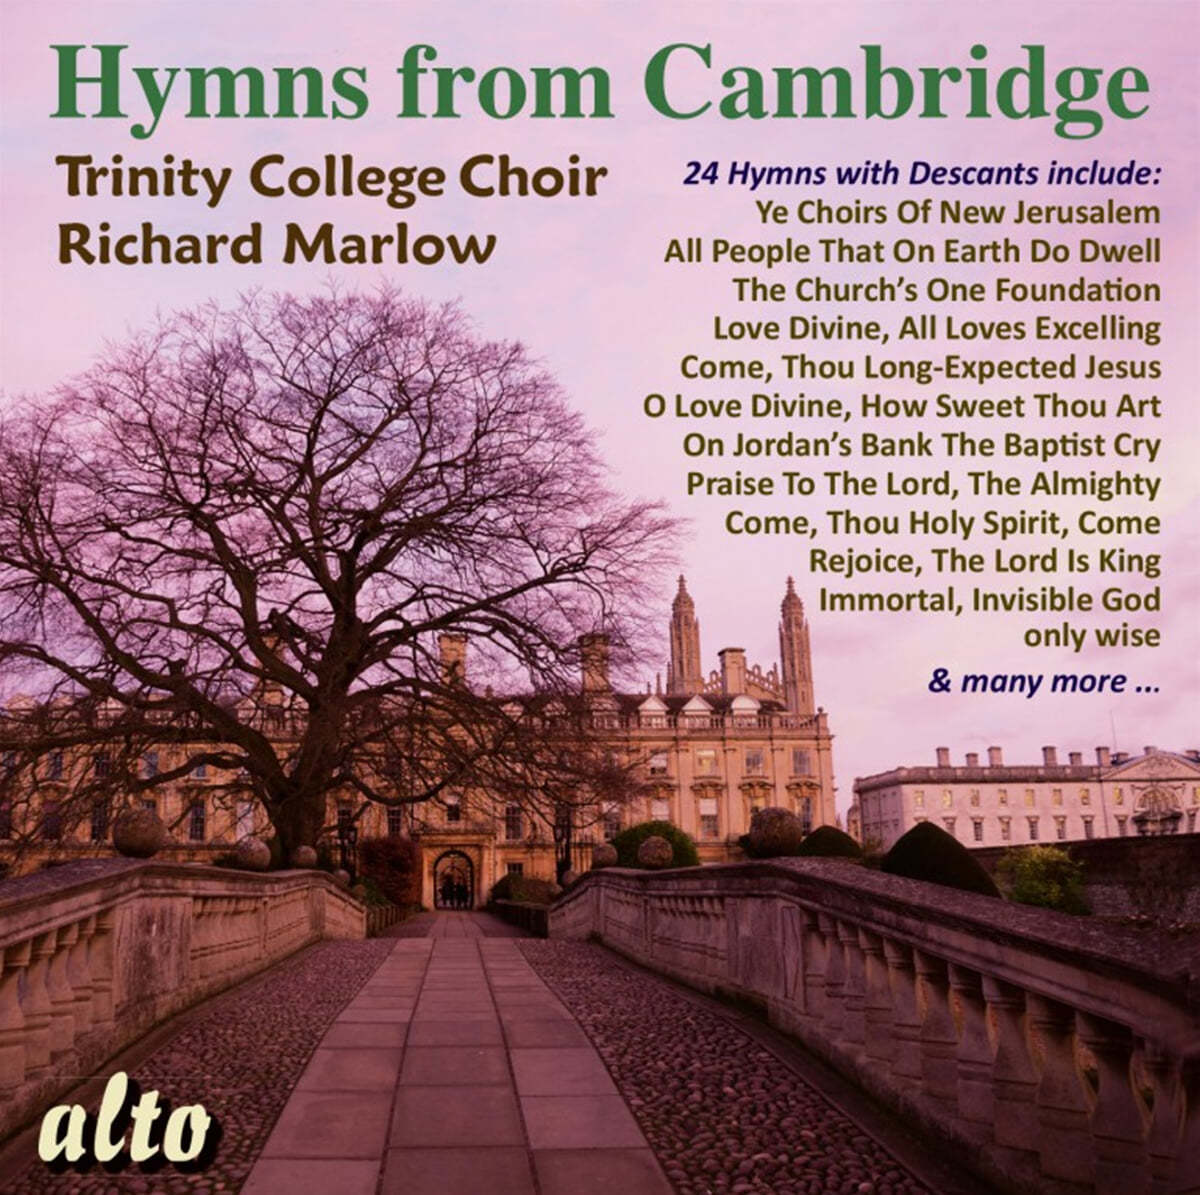 Richard Marlow 캠브리지 합창단이 부르는 찬송가 (Hymns from Cambridge) 